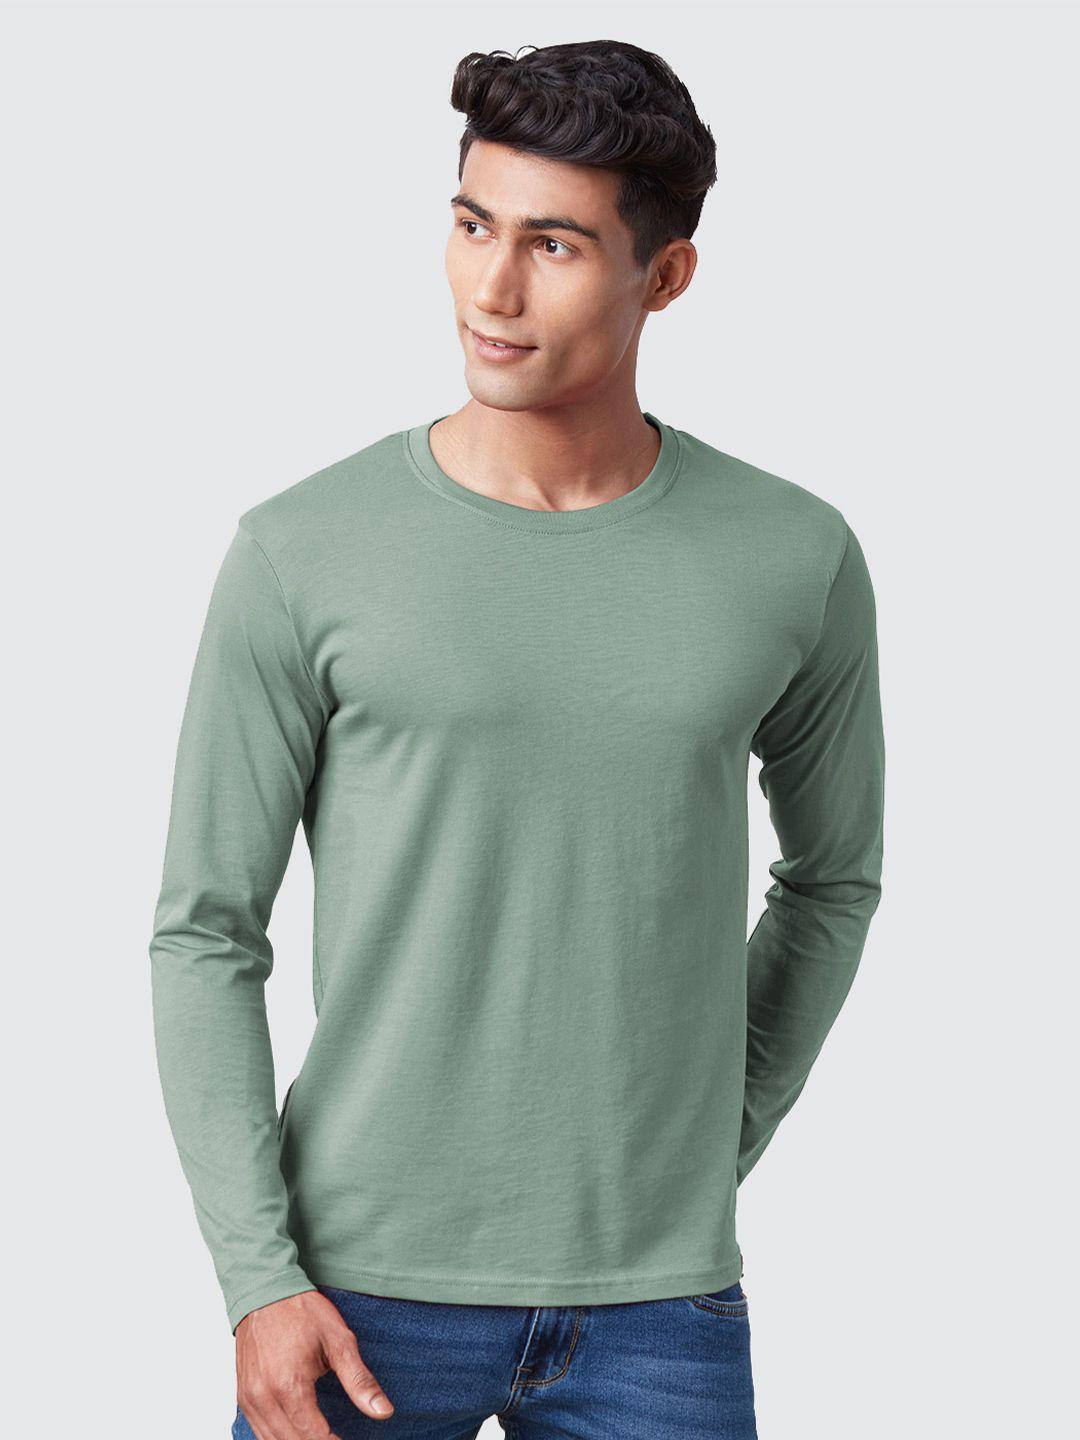 the souled store men green supima cotton t-shirt